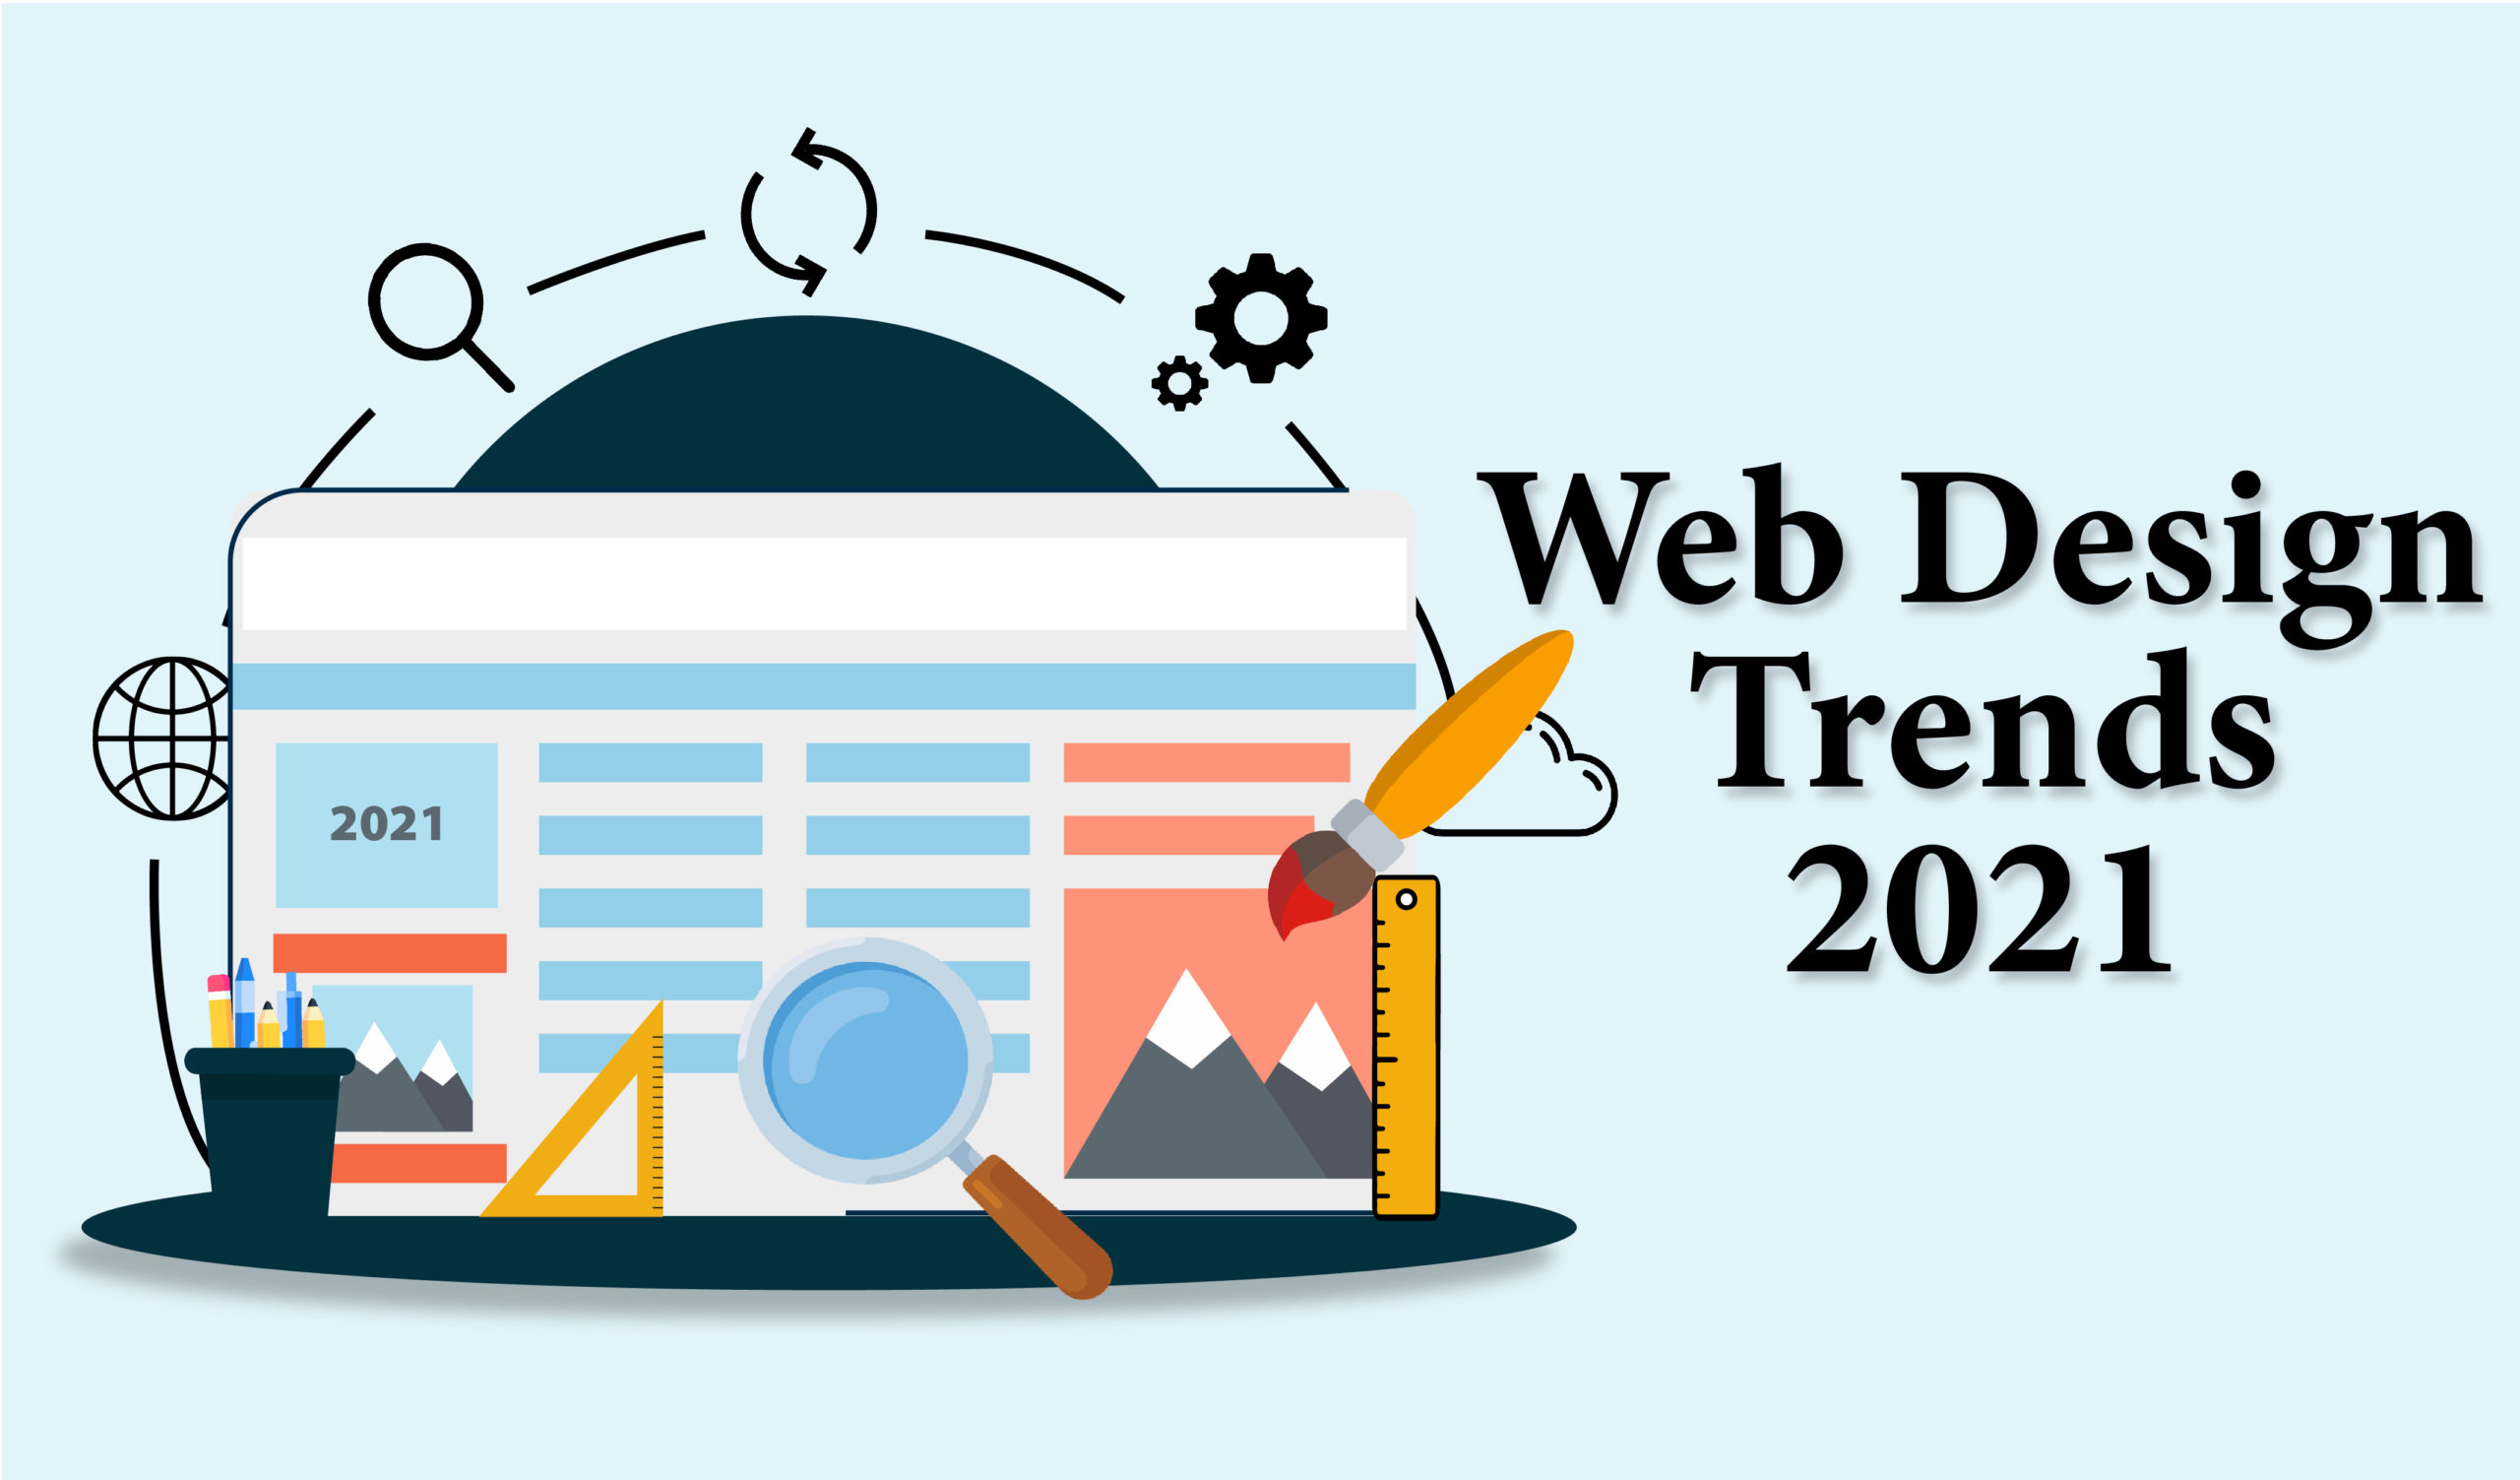 Web Design Trends 2021